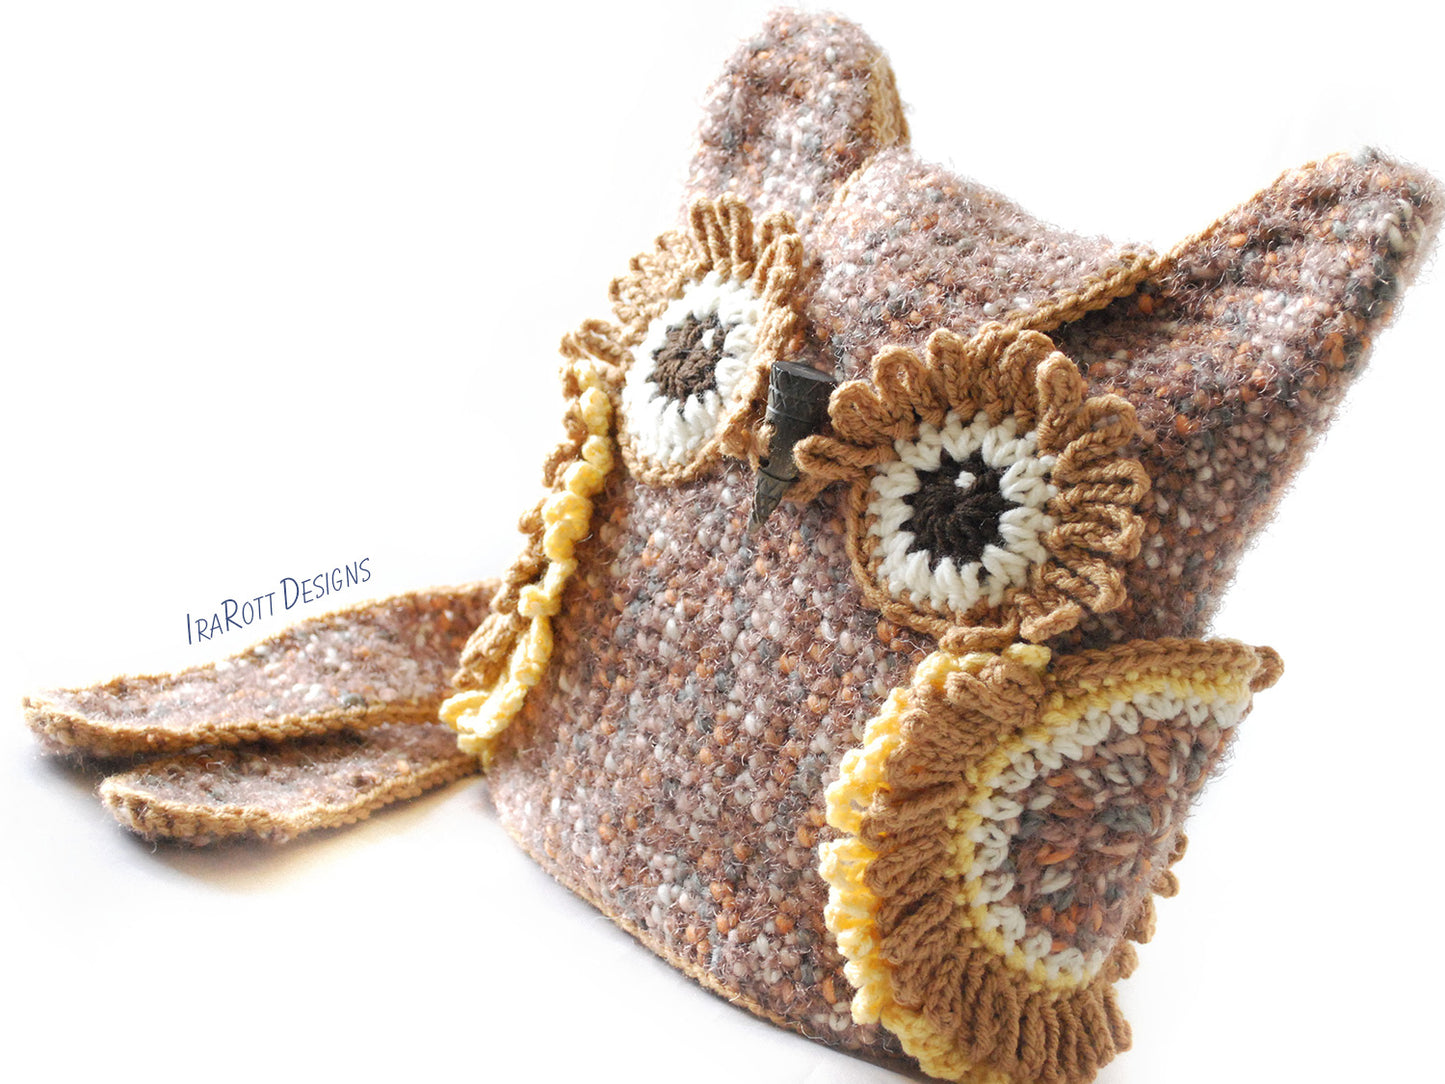 Hooty the Owl Buddy Bag Crochet Pattern